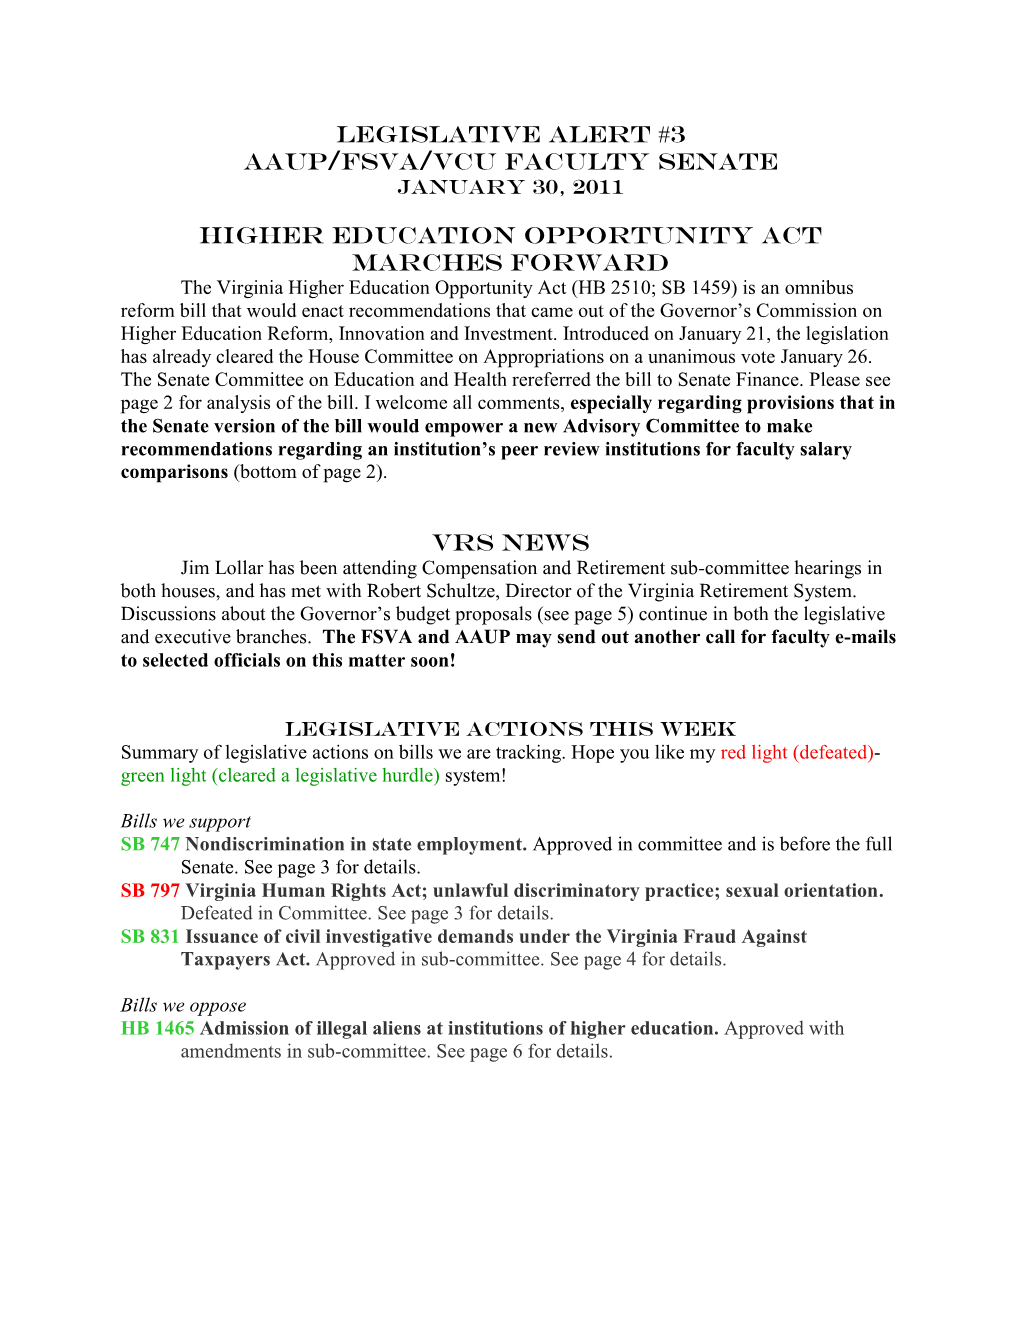 Legislative Alert to AAUP/FSVA January 19, 2007